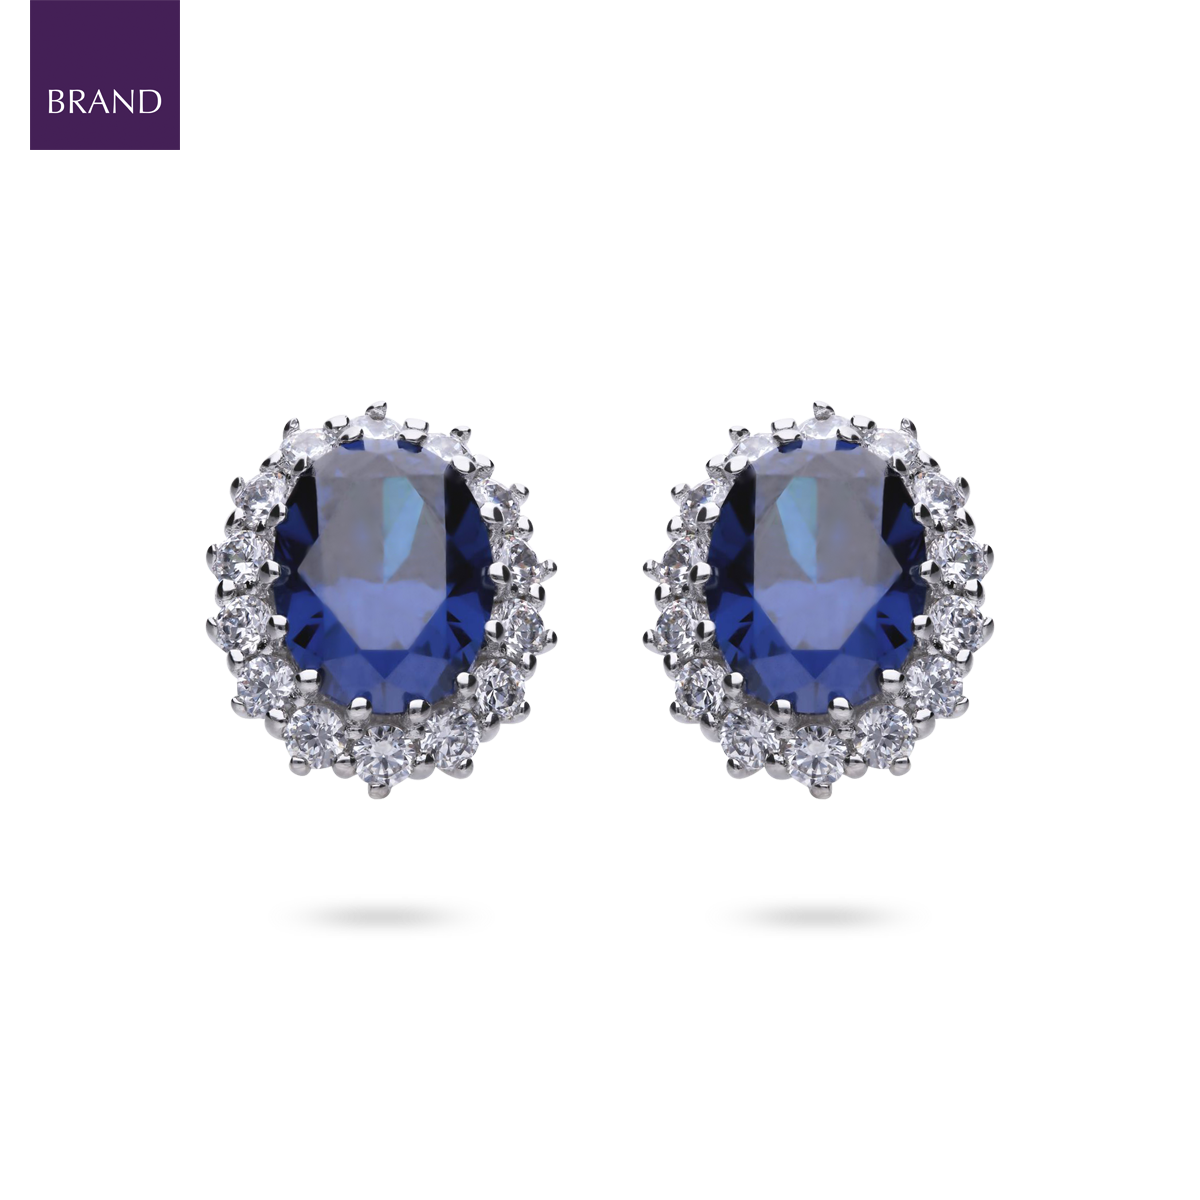 Sterling Silver Oval Shaped Blue Cubic Zirconia Cluster Stud Earrings